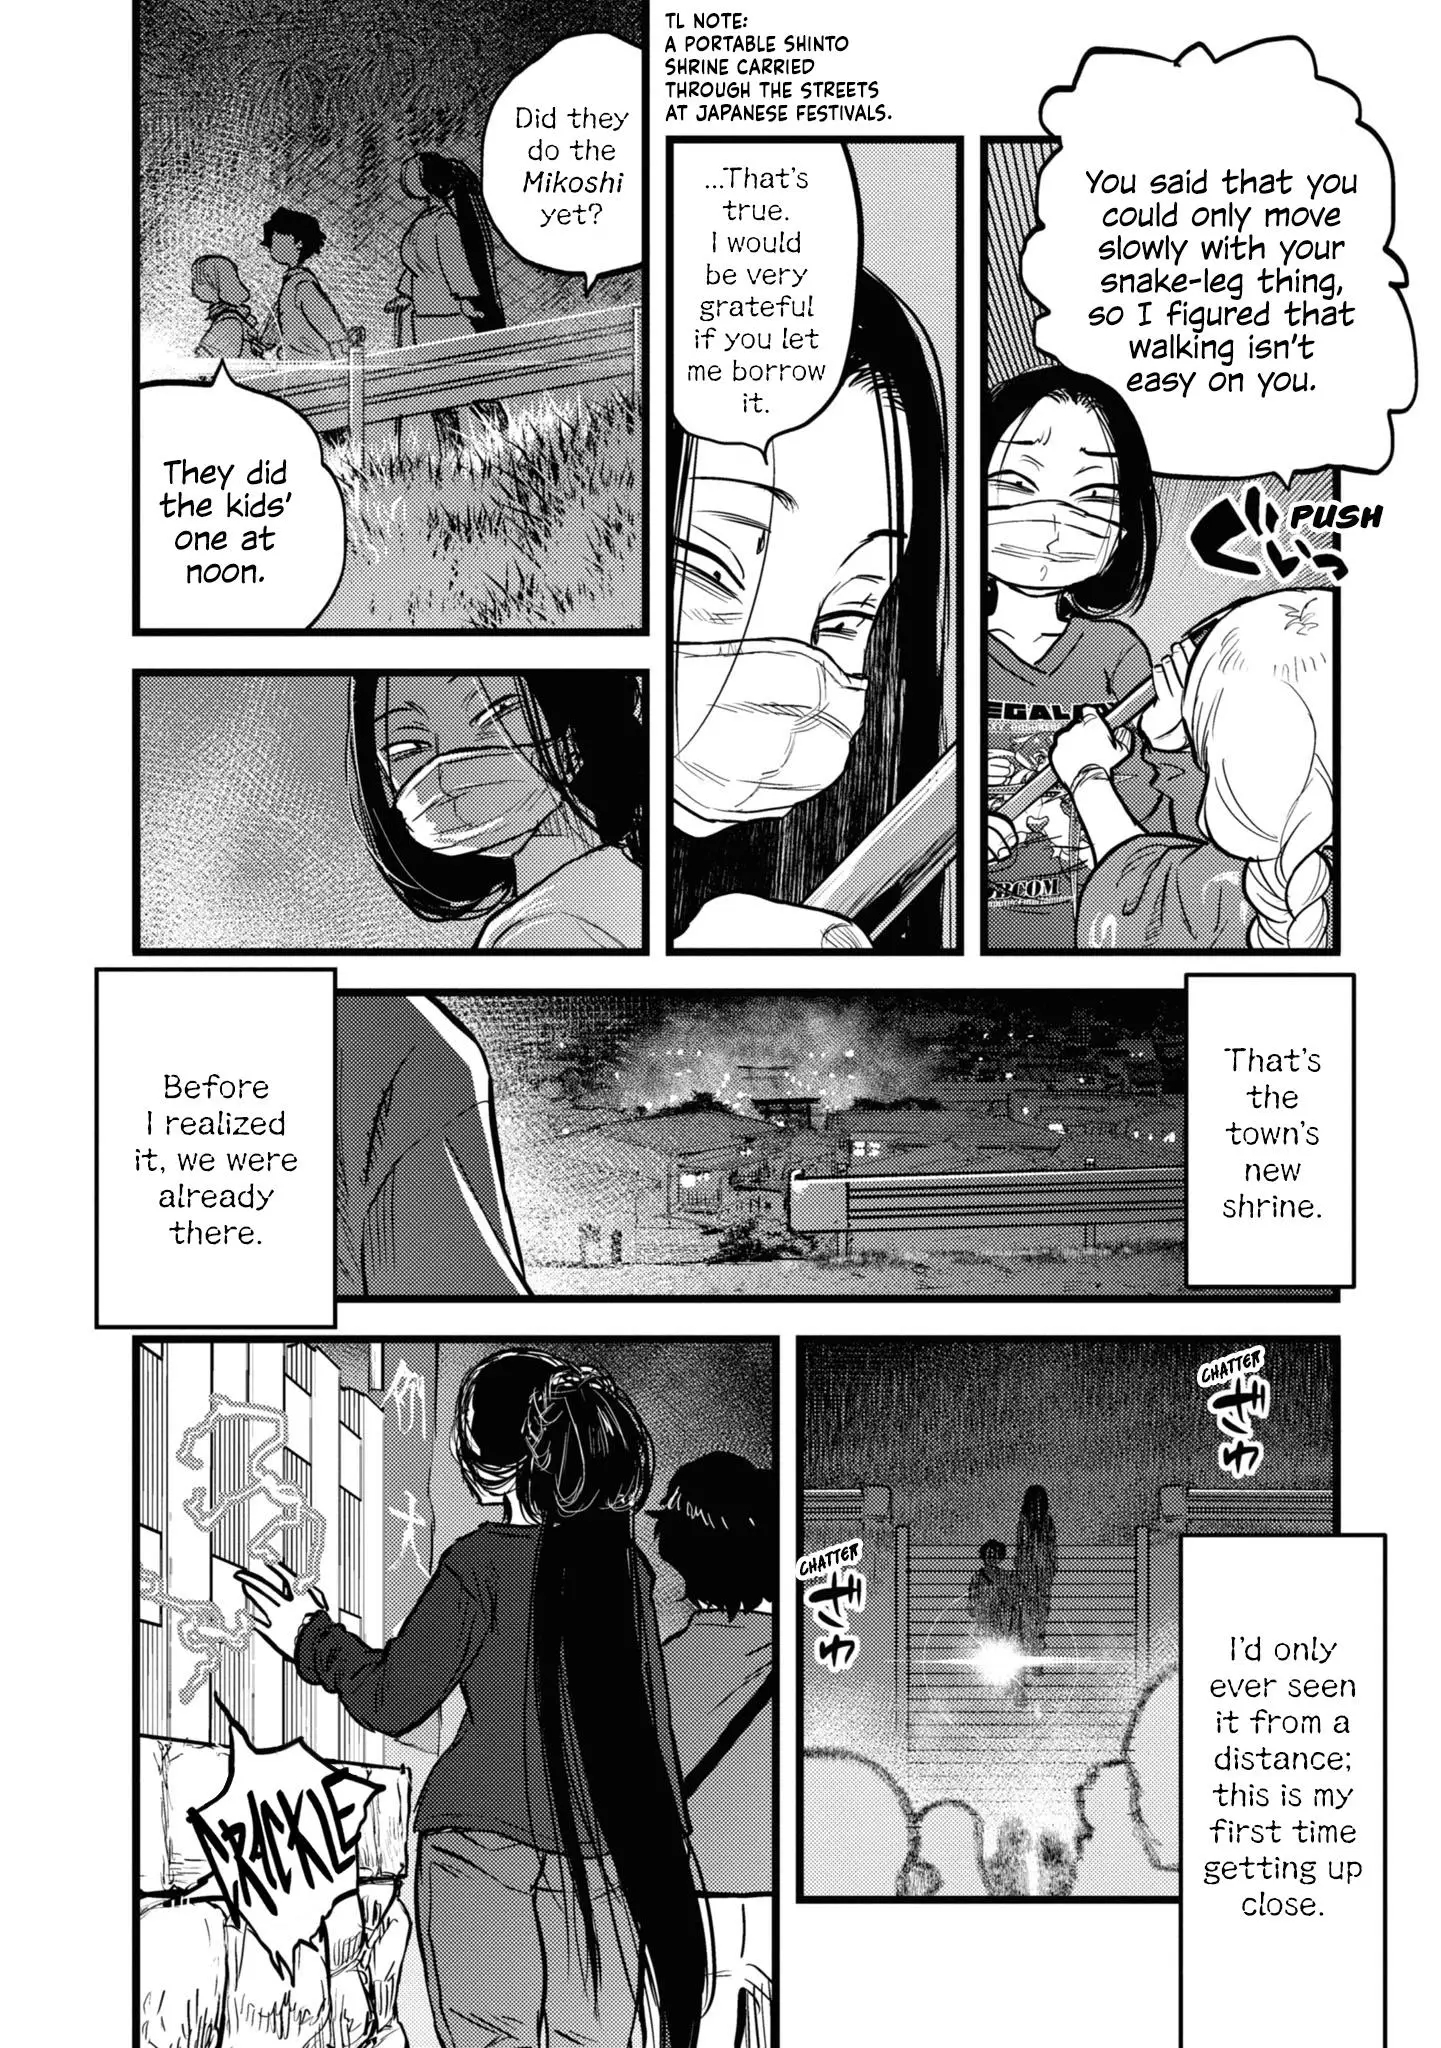 Reiwa No Dara-San - 14 page 10-20dddc41